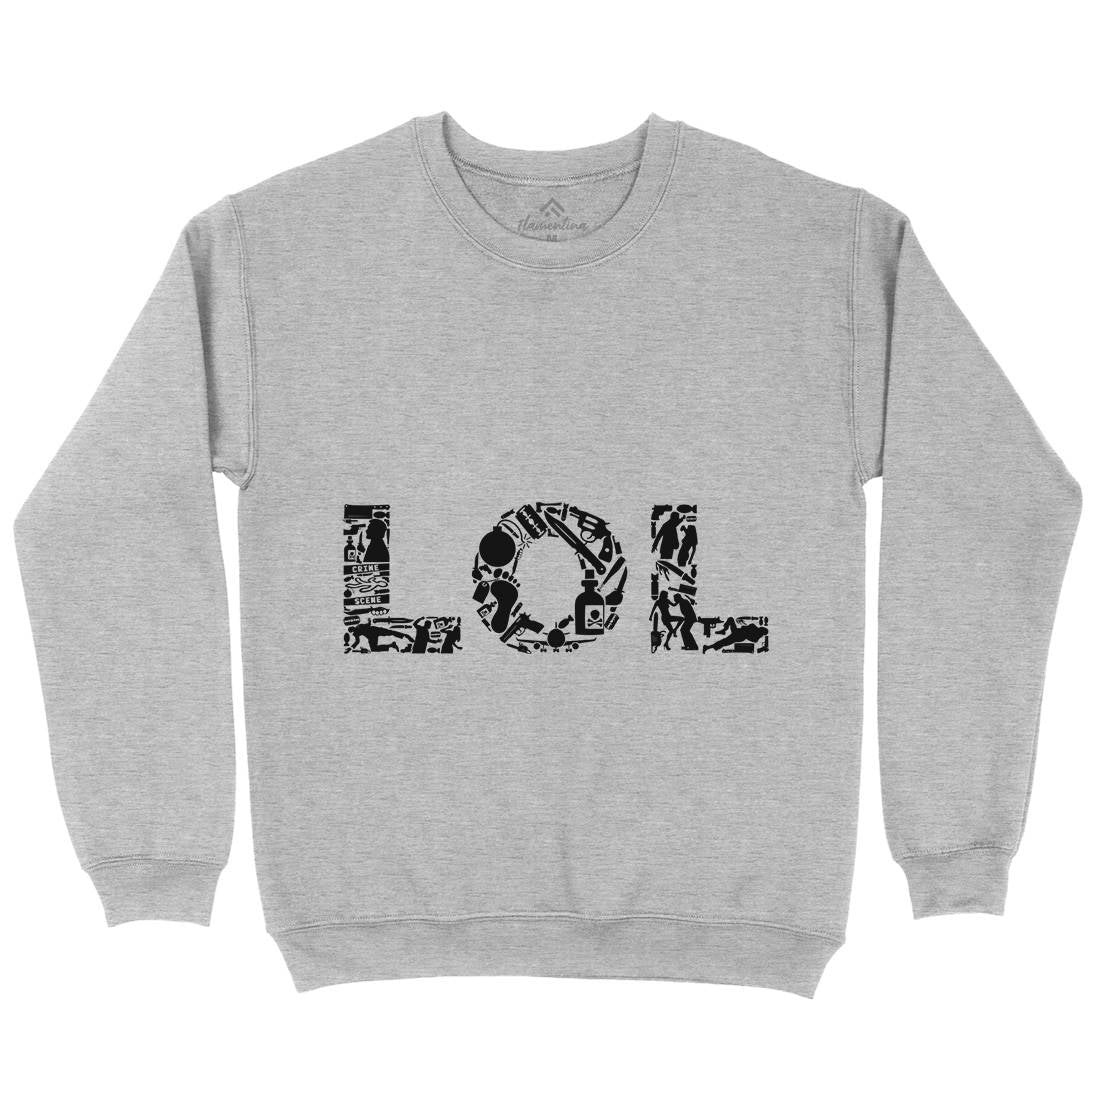 Lol Kids Crew Neck Sweatshirt Retro B060